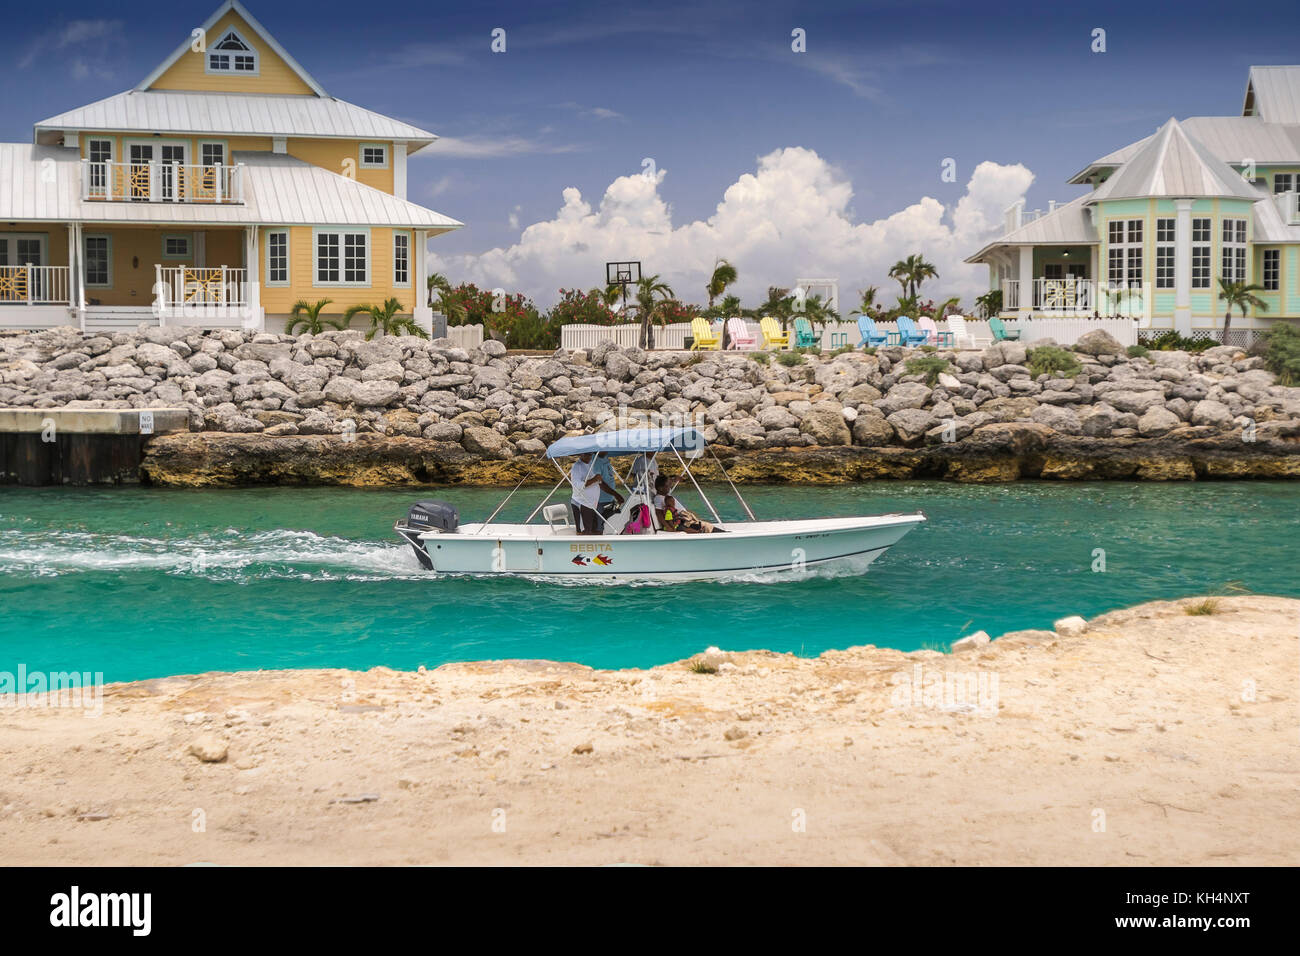 La marina taglio sul chub Cay, Bahamas Foto Stock